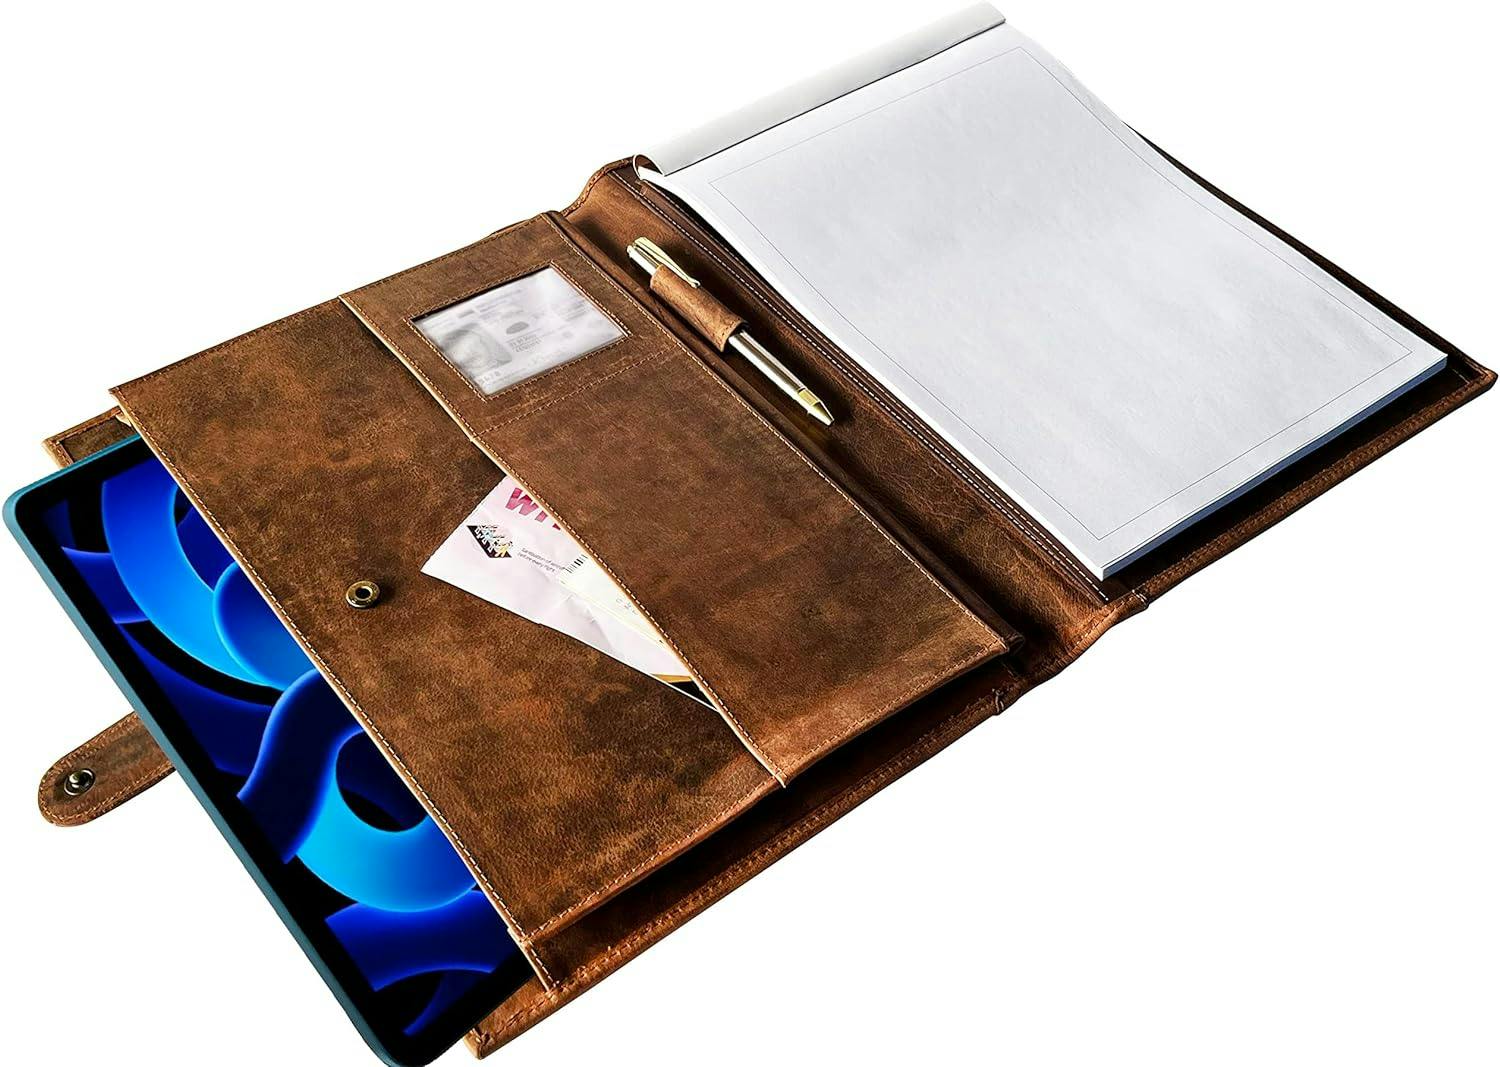 Elegant Full-Grain Leather Portfolio - Professional Organizer for Documents and Tablet